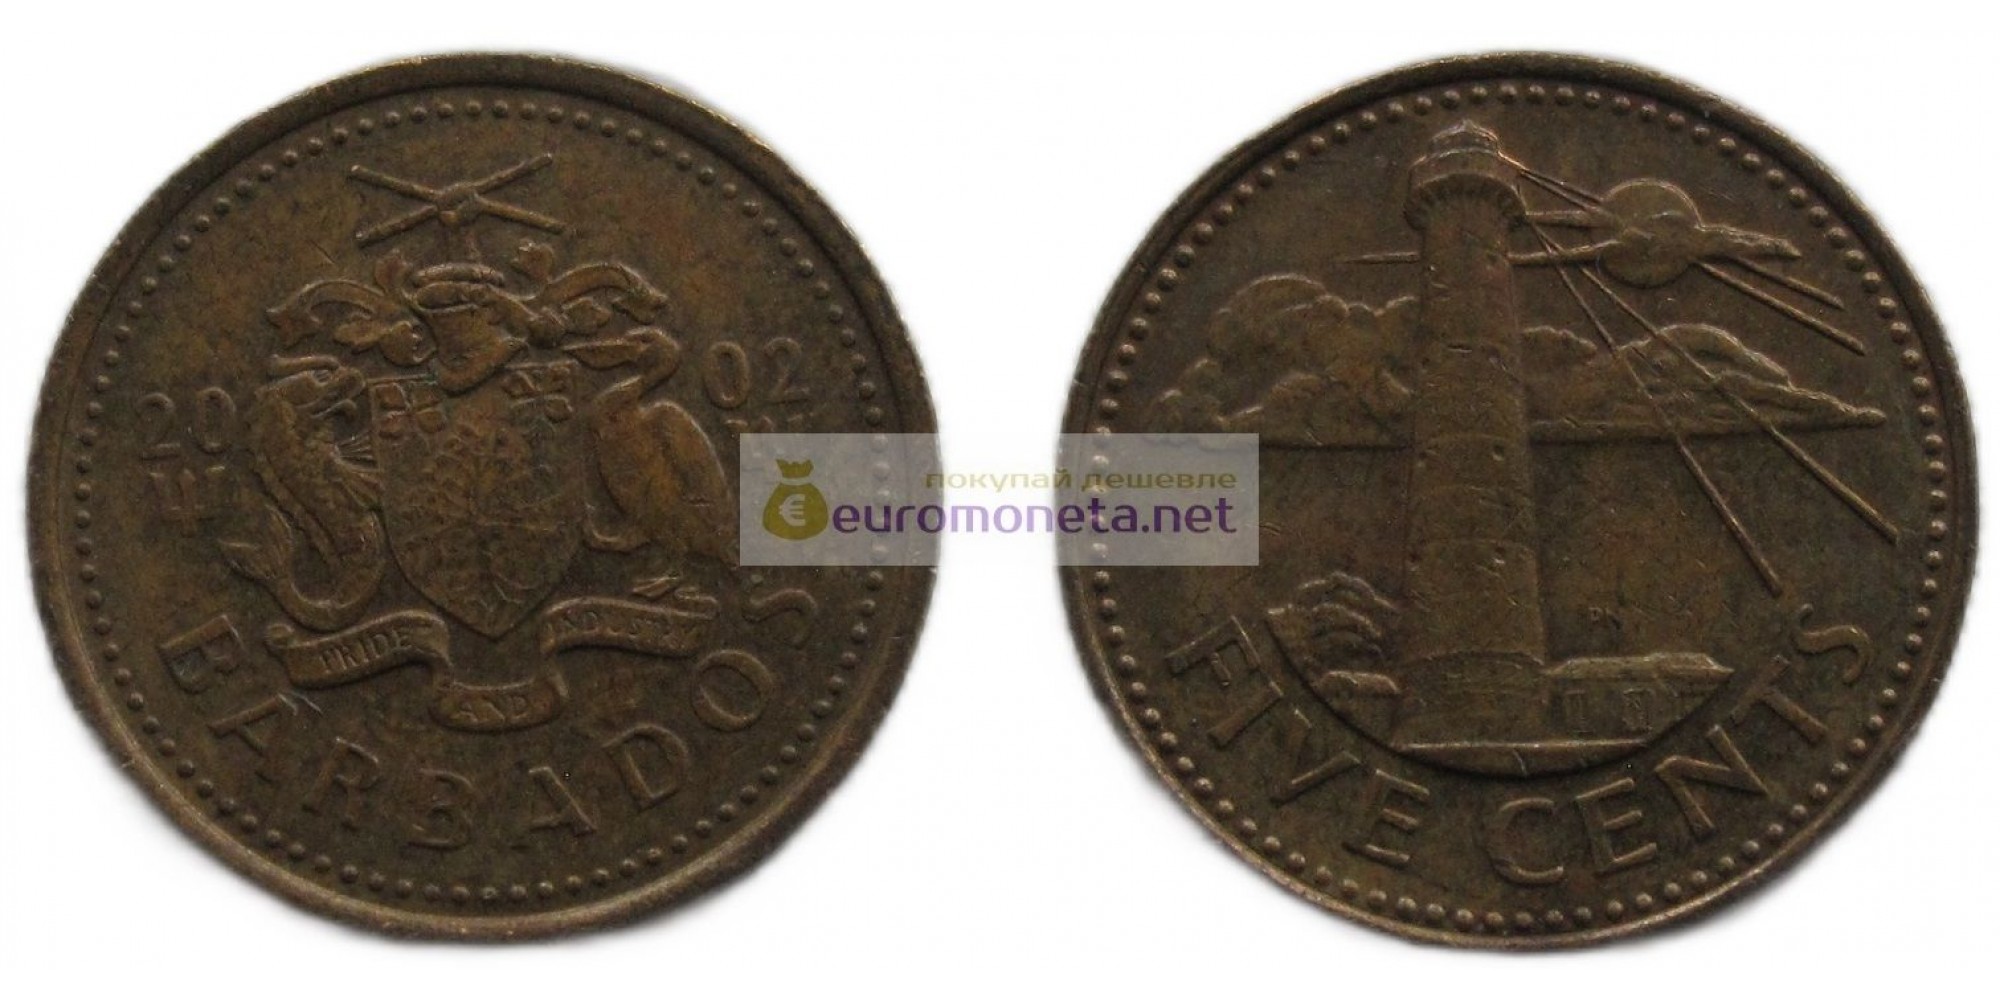 Барбадос 5 центов 2002 год. Королева Елизавета II